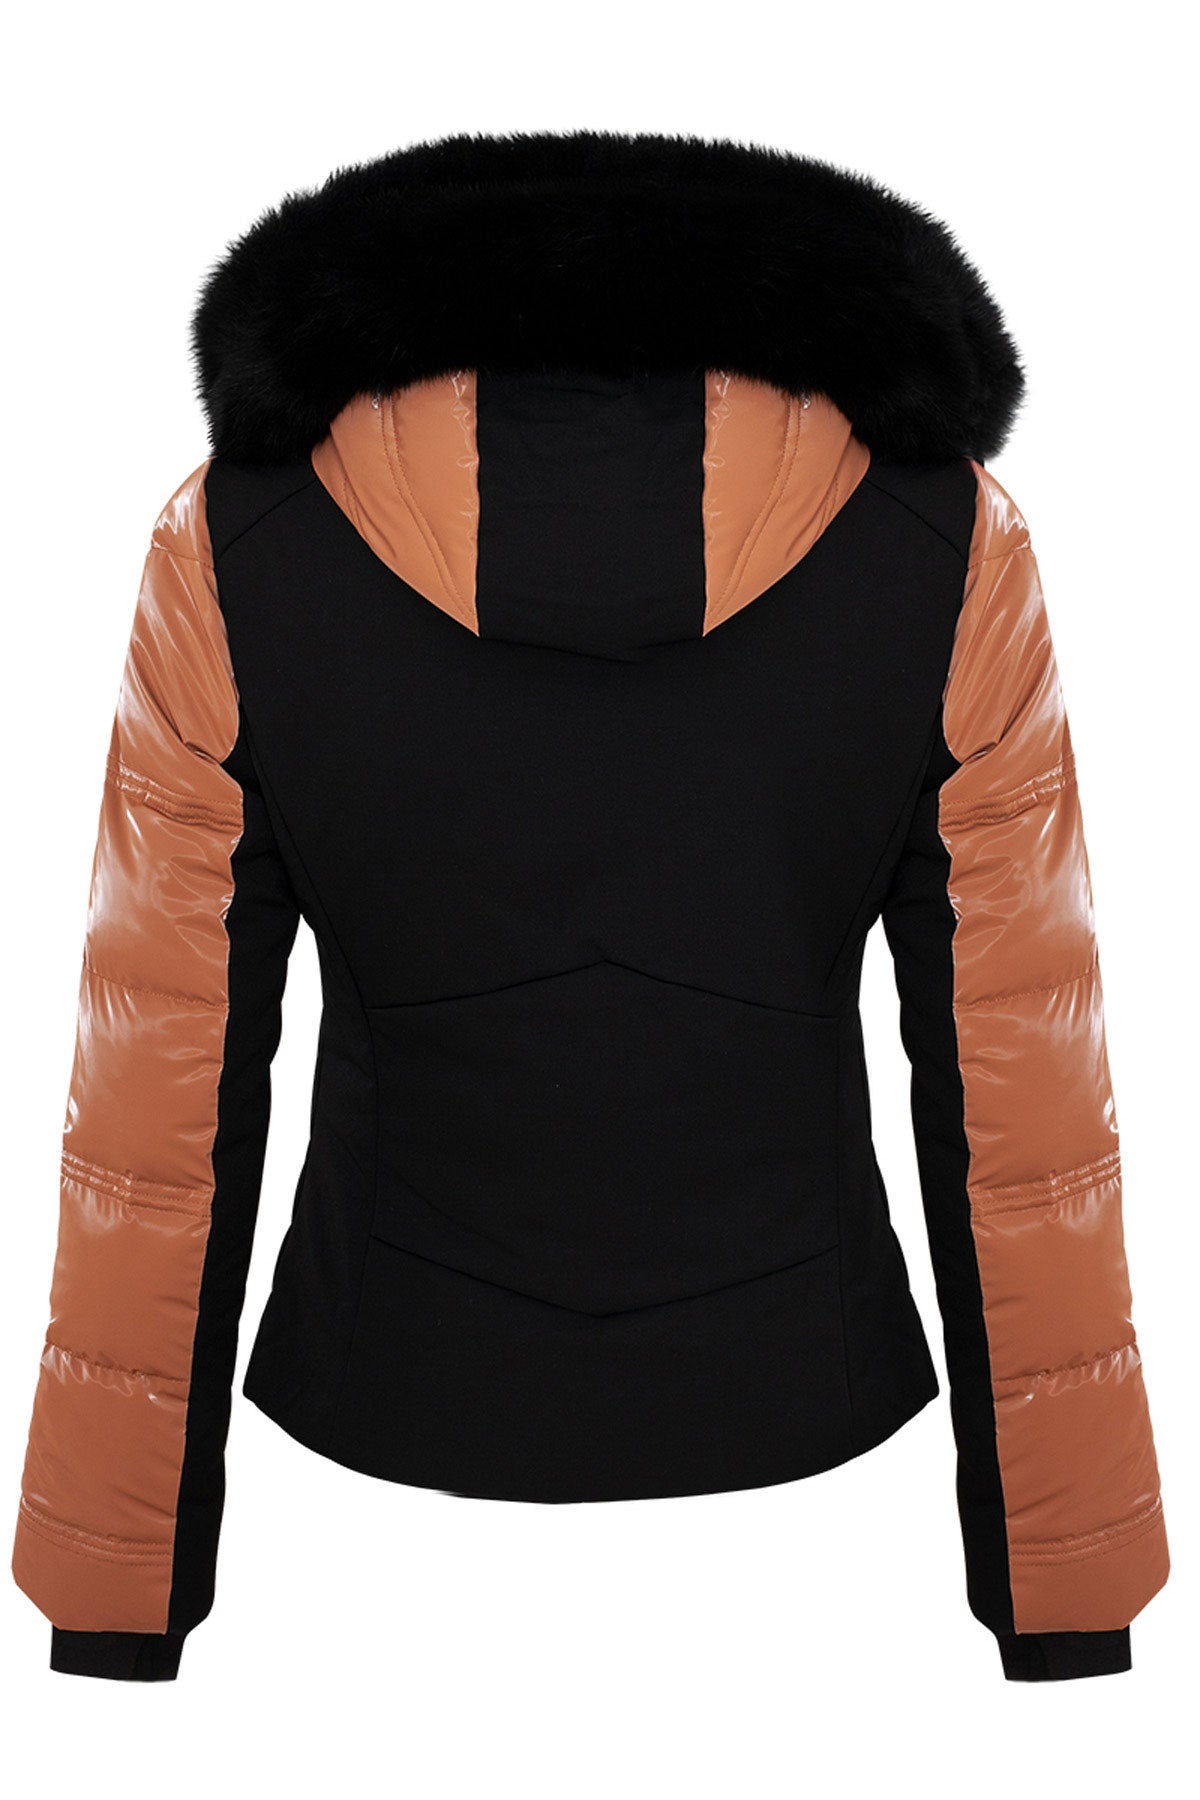 High Society Alyssa Marone Faux Leather Down Ski Jacket with Faux Fur Hood